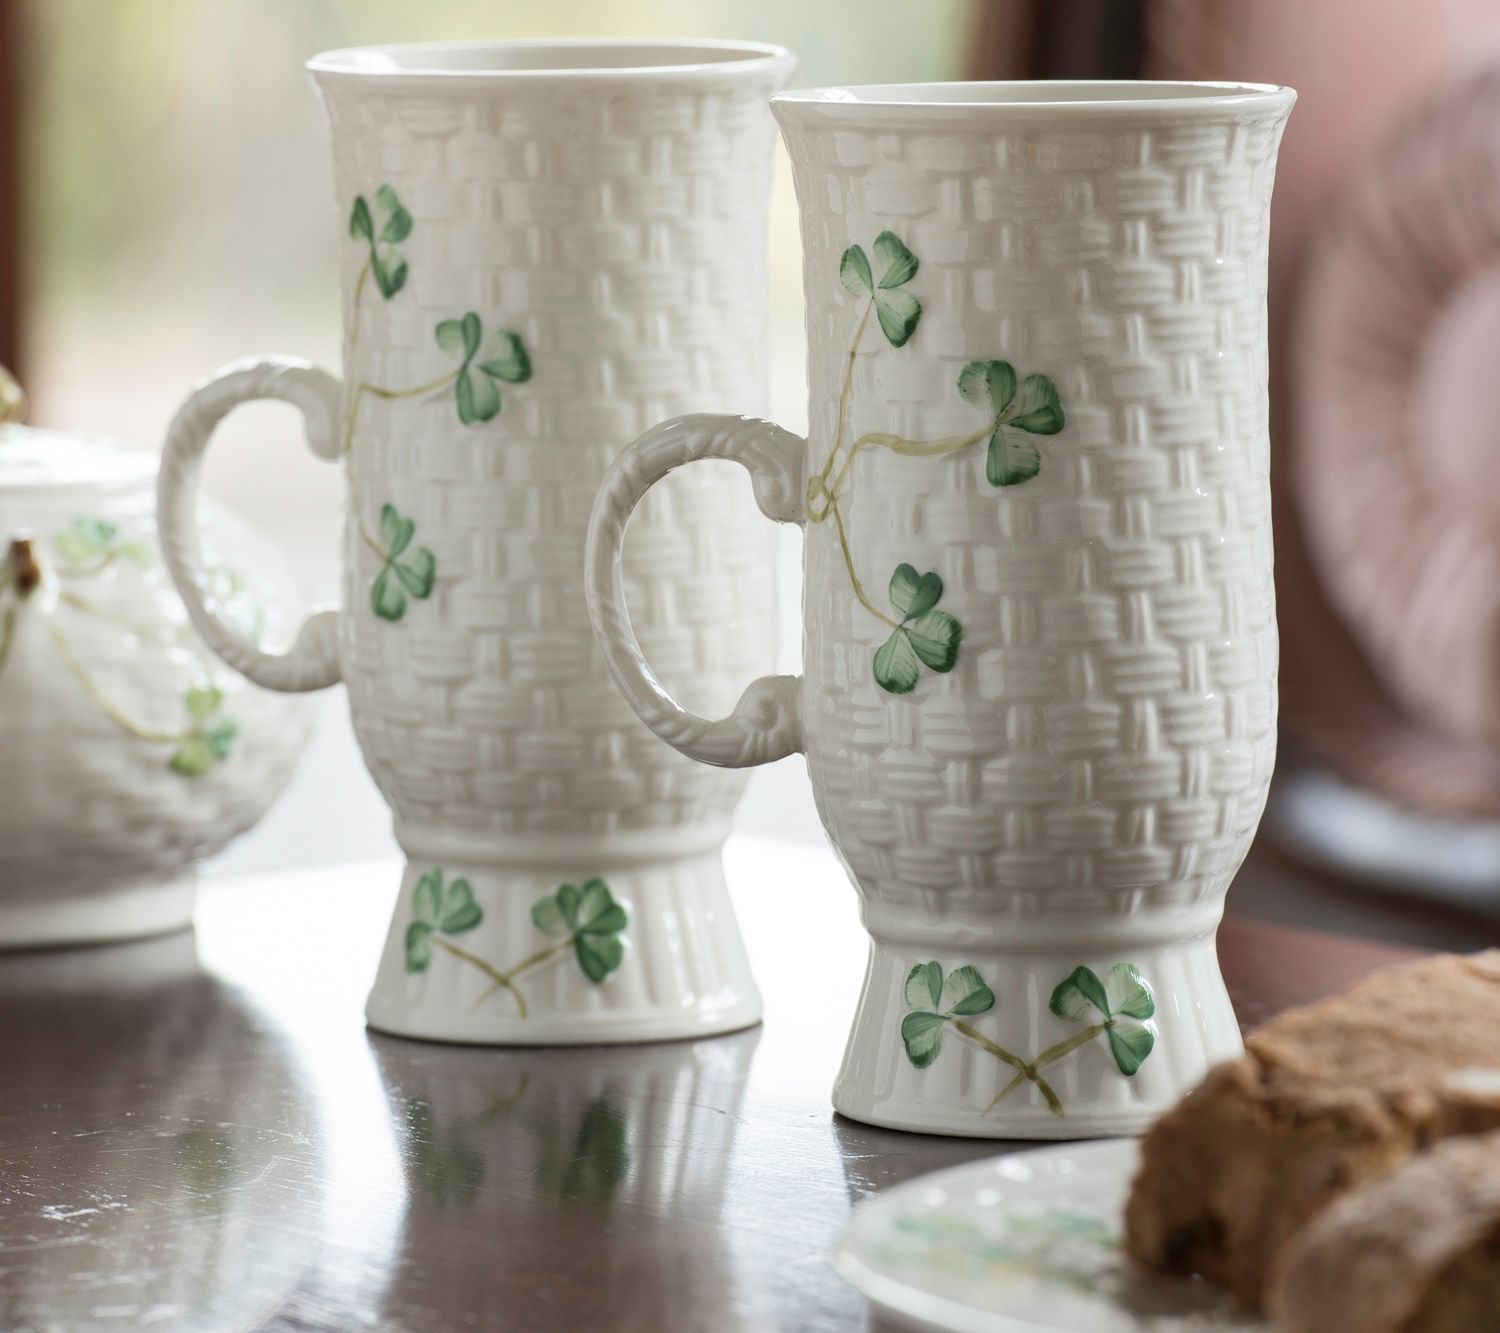 Traditional Irish Coffee Glass Coffee Mugs Pedestal Design 8 oz